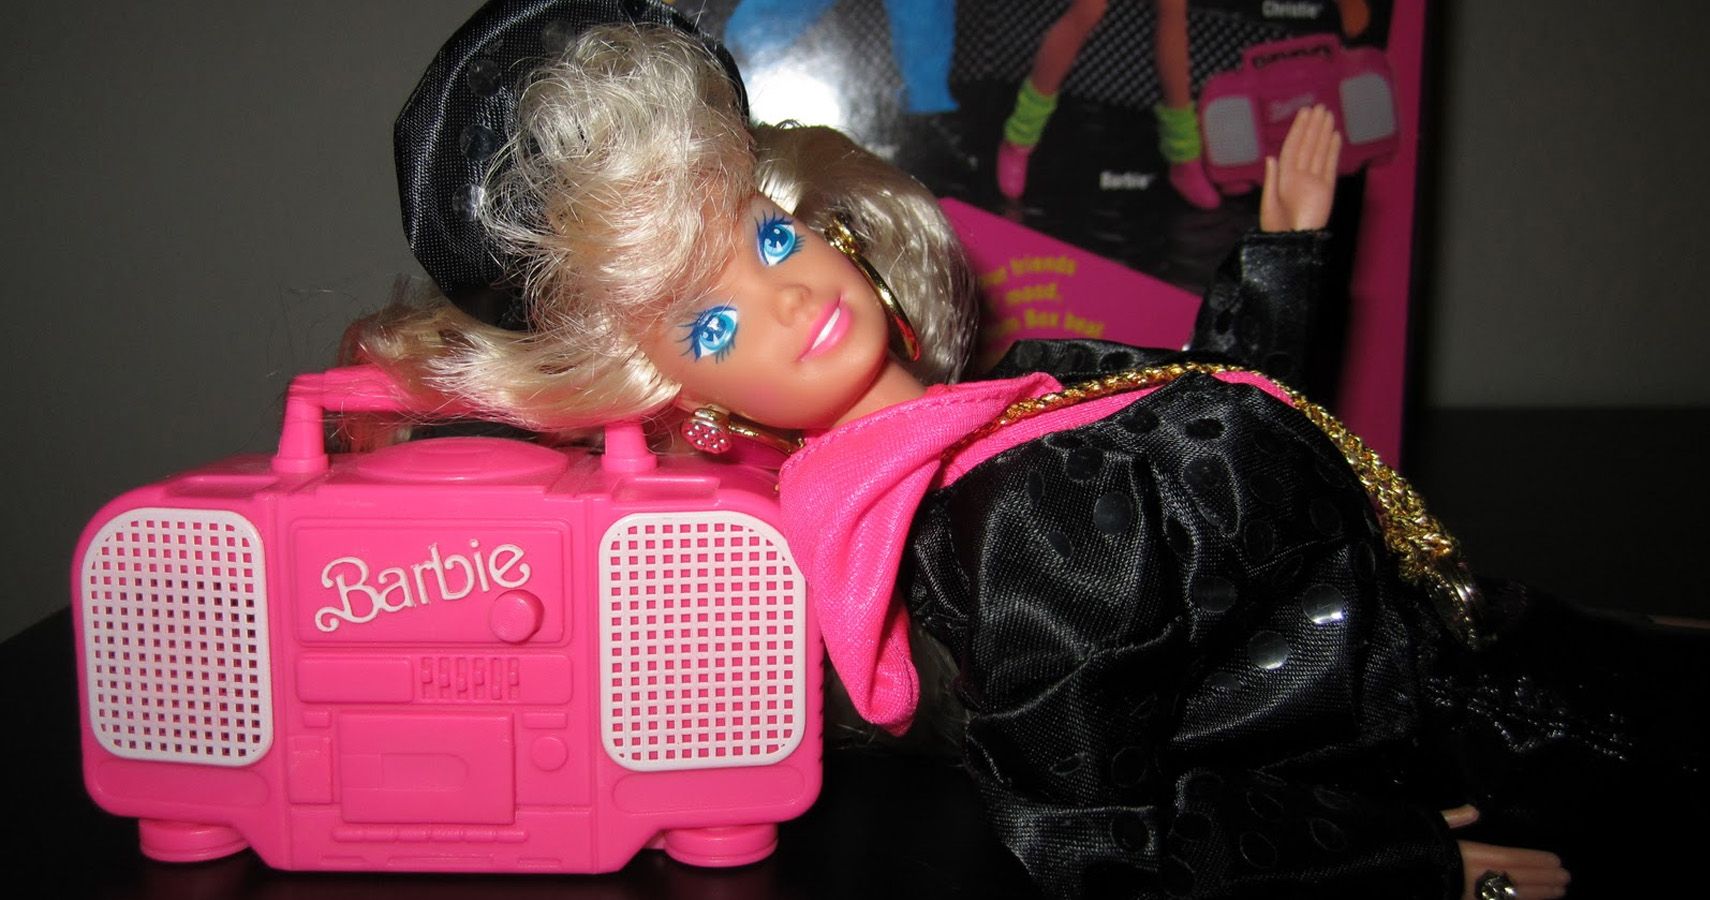 Onaangenaam Vermoorden Grillig 25 Hilarious Barbie Dolls (That Couldn't Be Made Today)